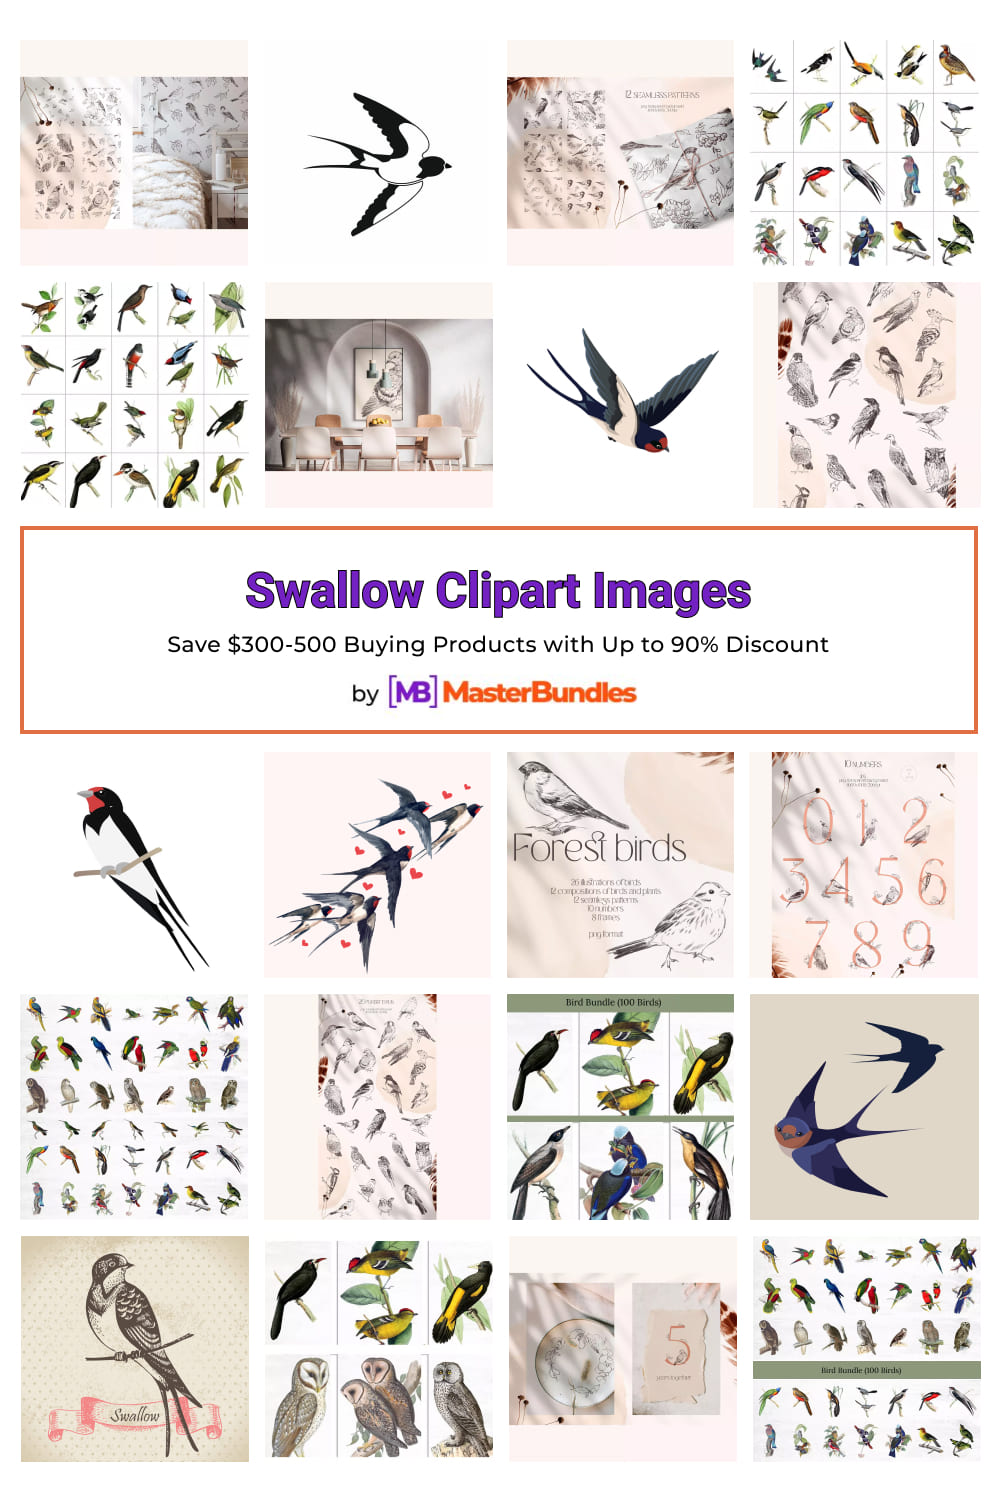 Swallow Clipart Images Pinterest.